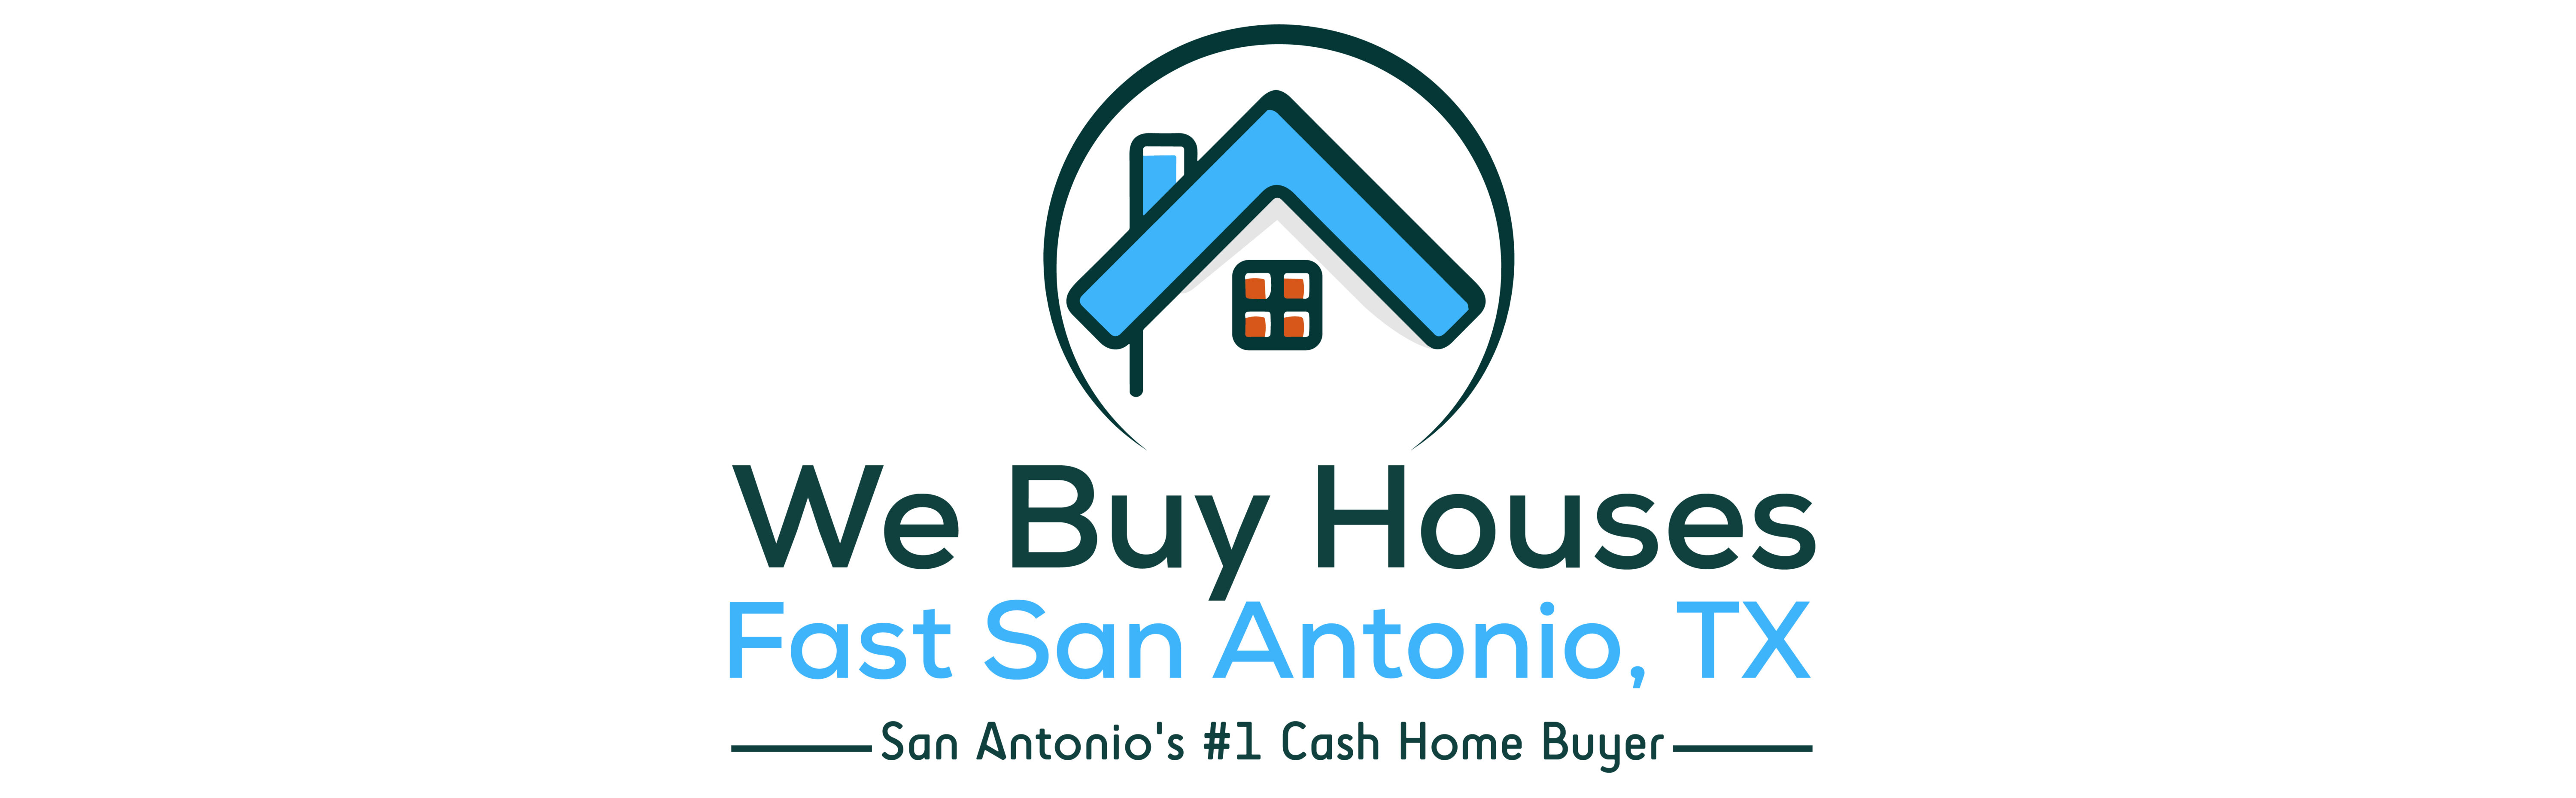 We Buy Houses Fast San Antonio TX logo